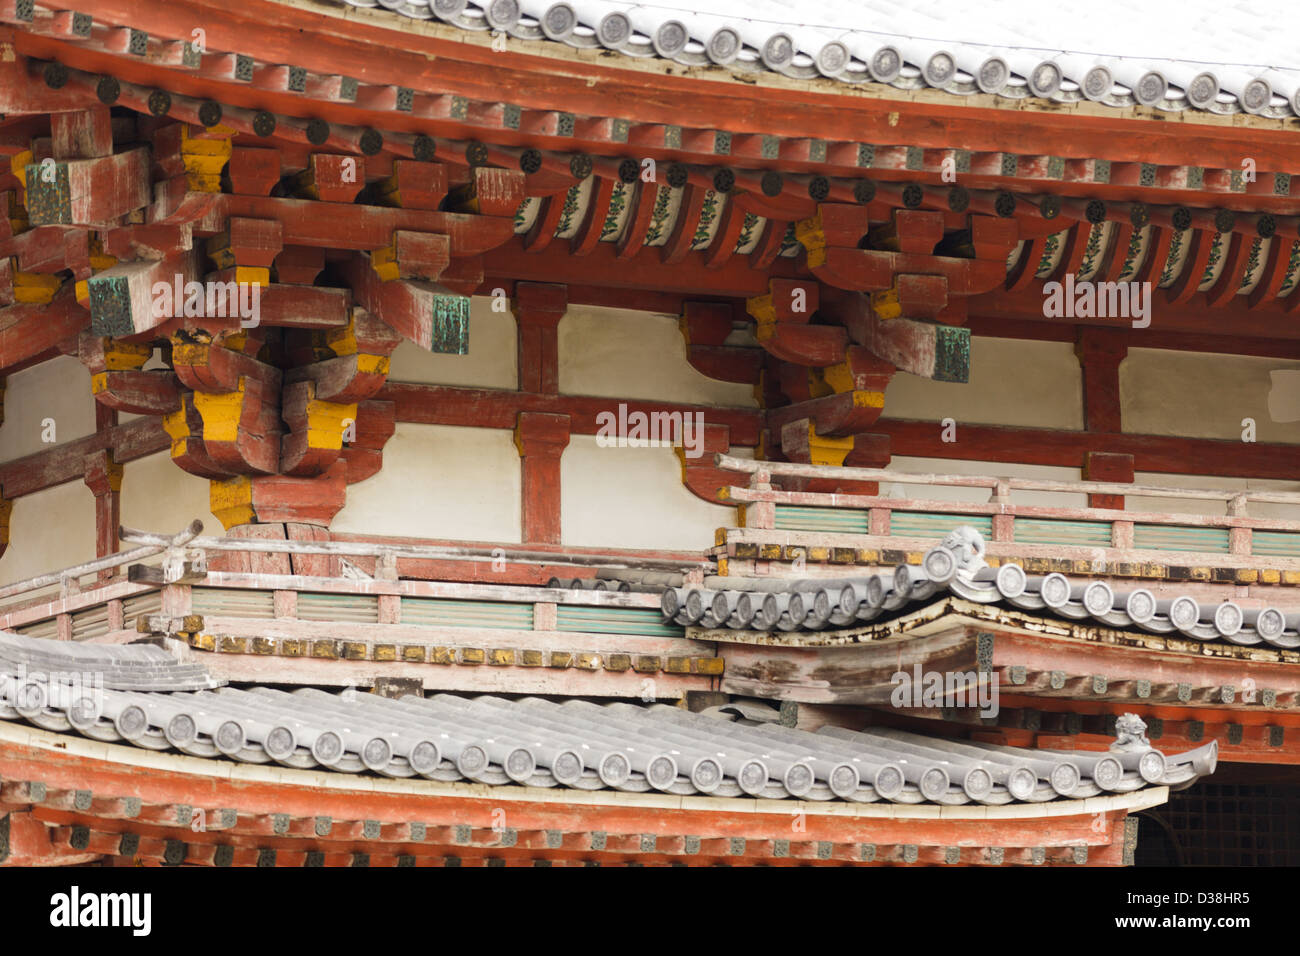 Byōdō-in temple in Uji town, near Kyoto, Japan Stock Photo